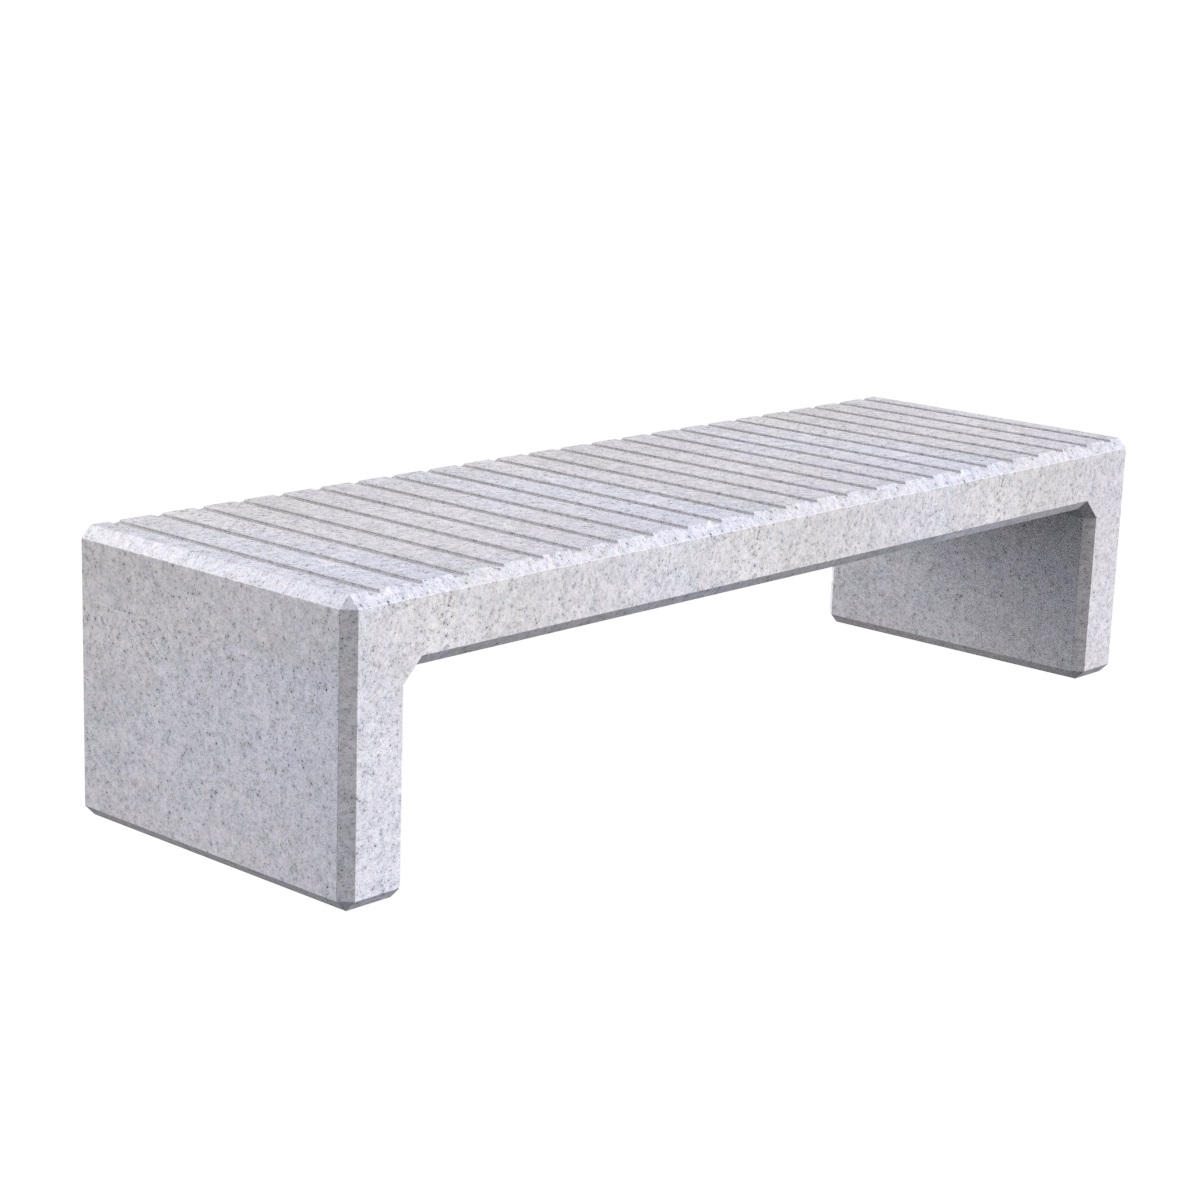 Zeus bench made of polyethylene with anti-salt properties.